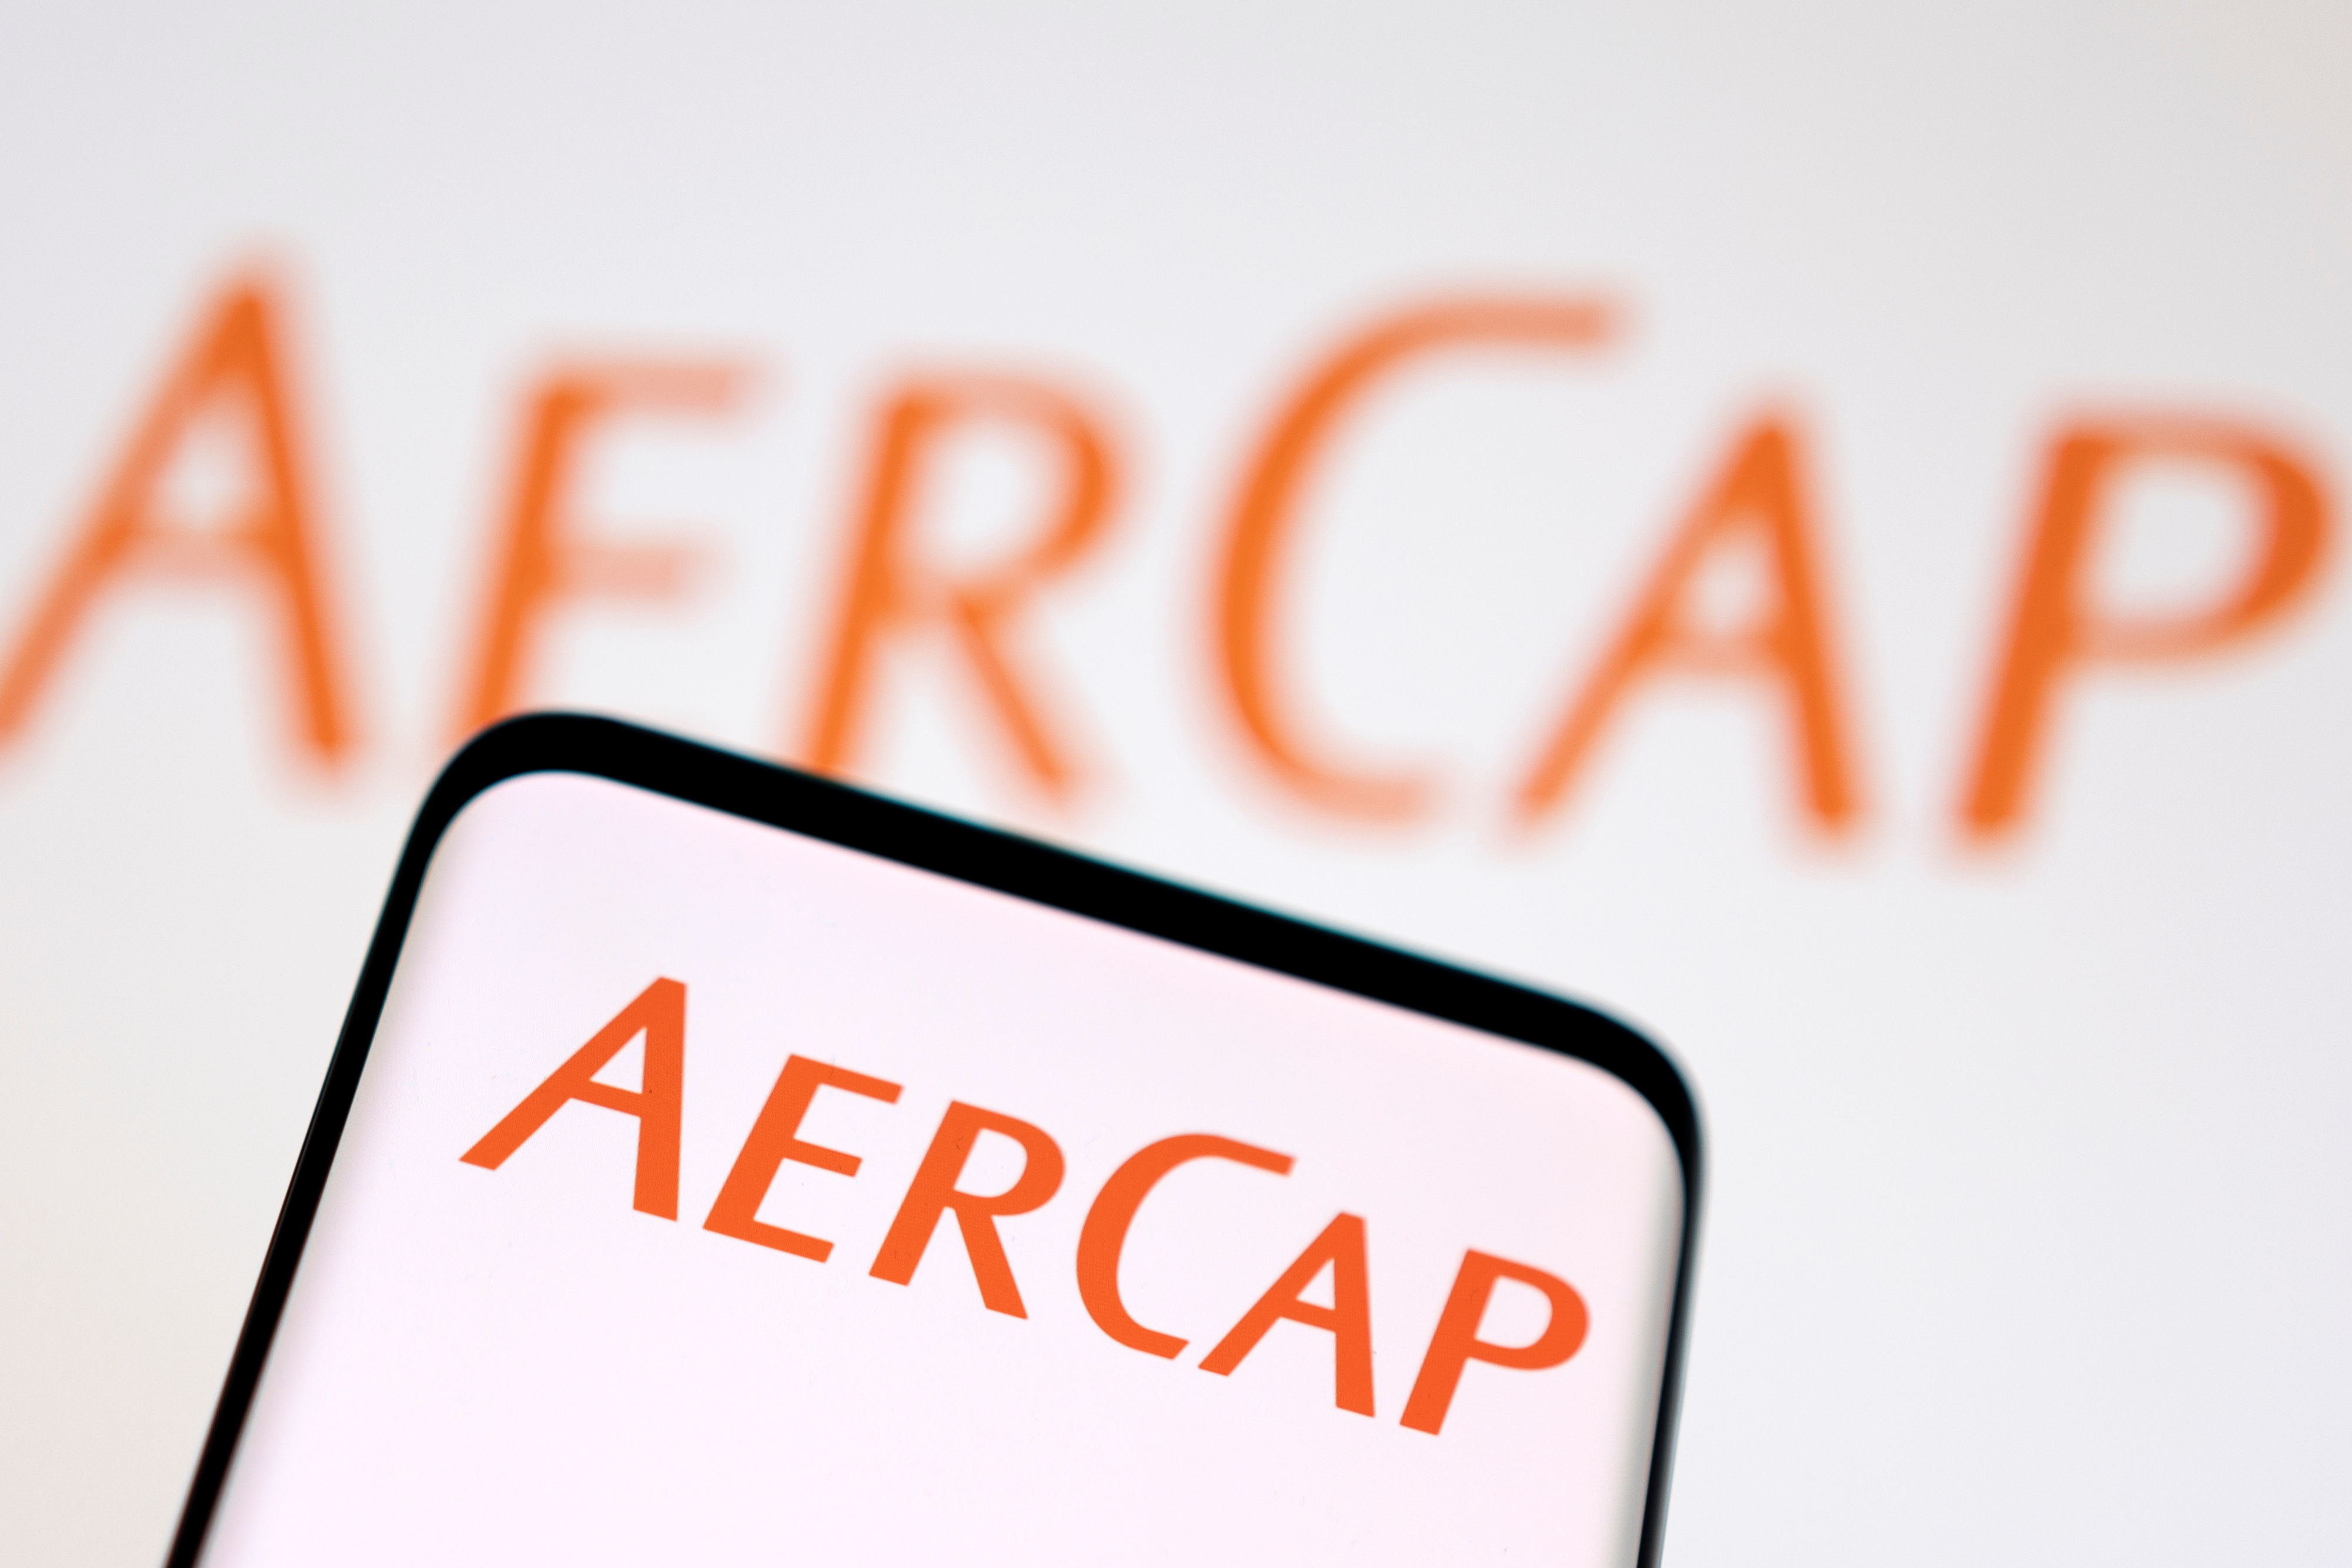 Illustration shows AerCap logo